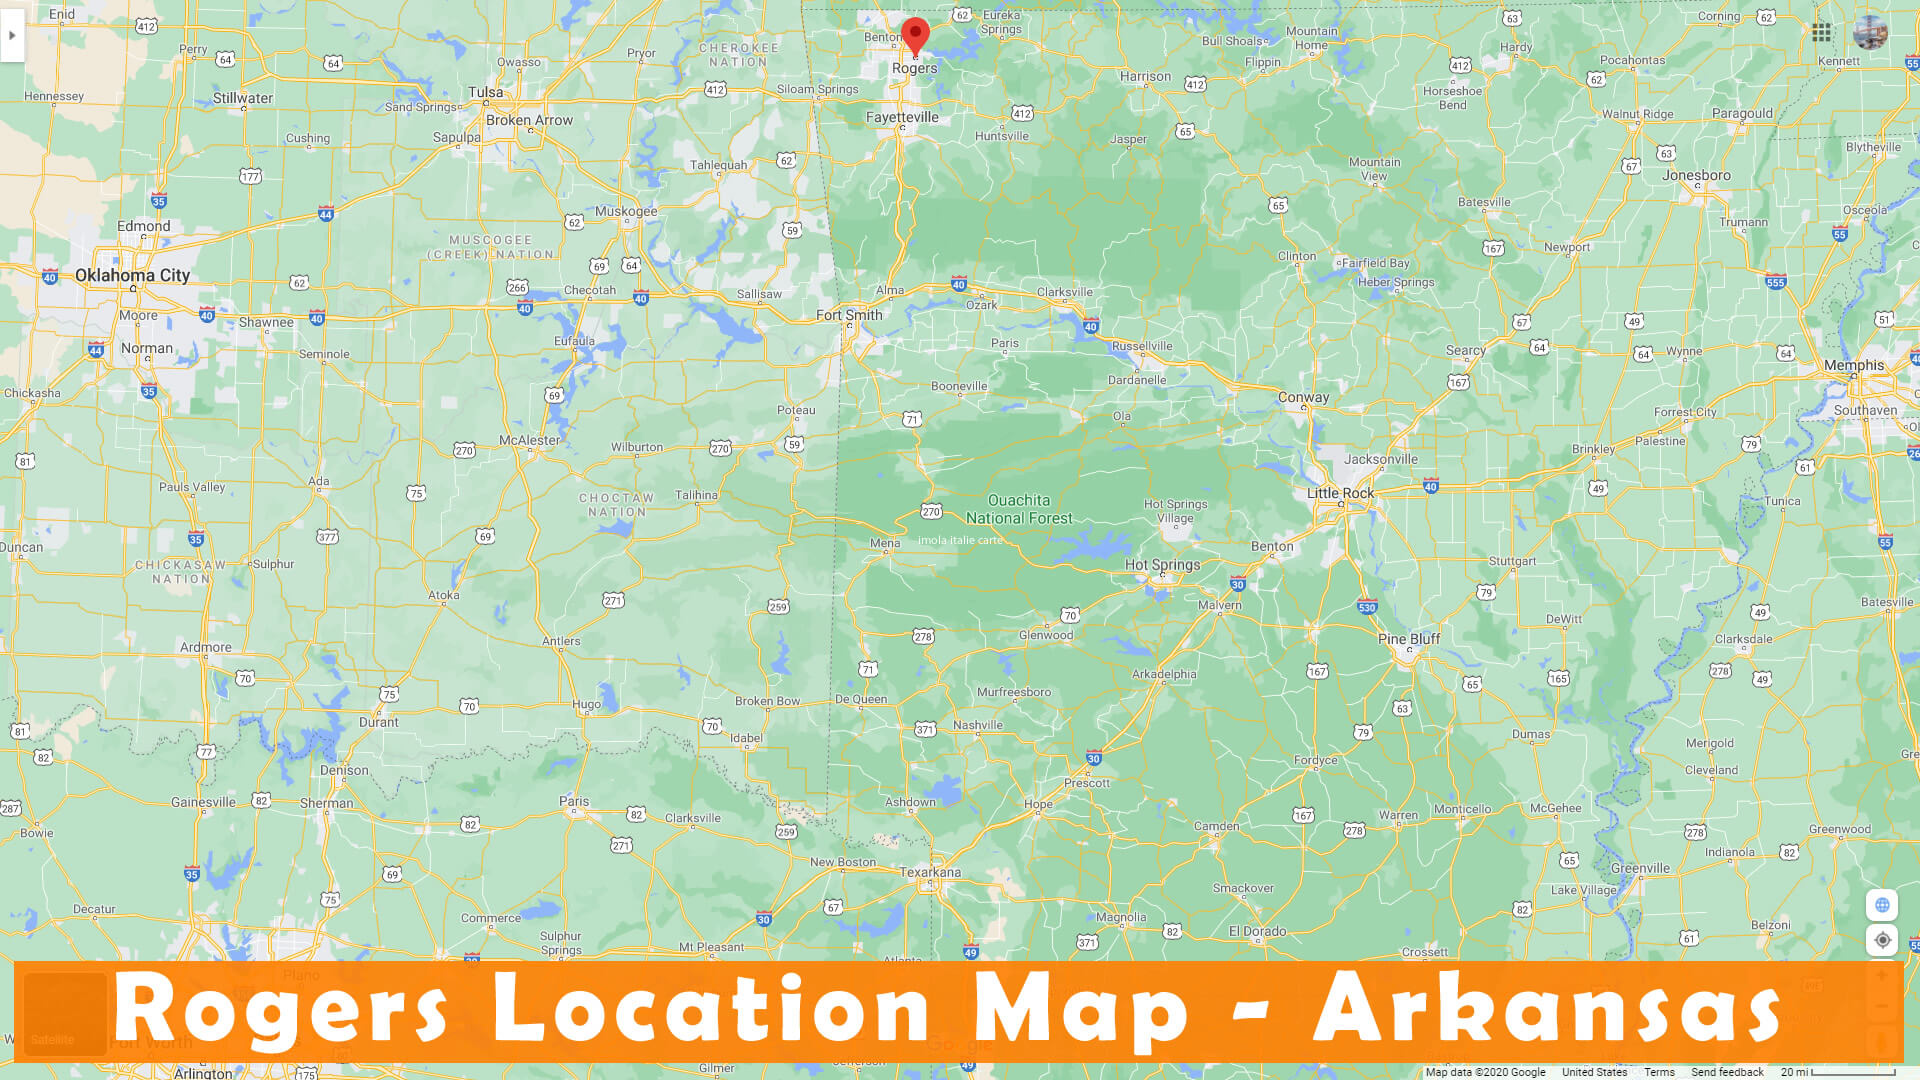 Rogers Location Map Arkansas